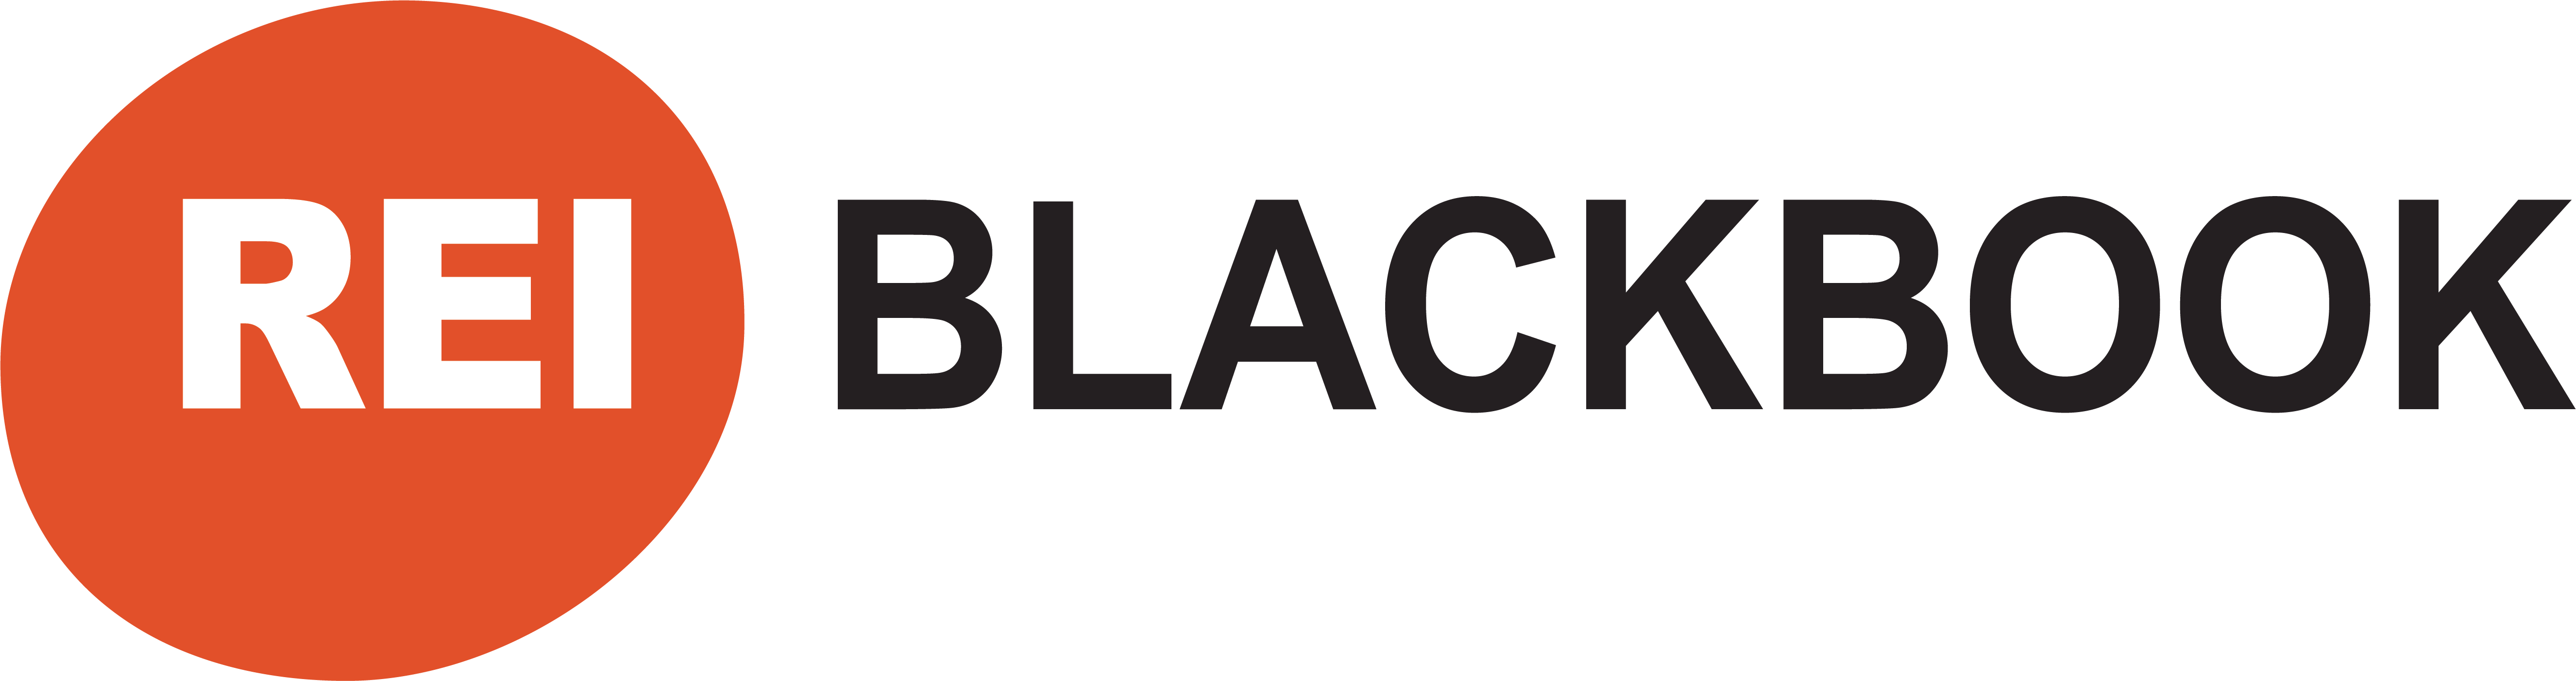 rei-blackbook-logo